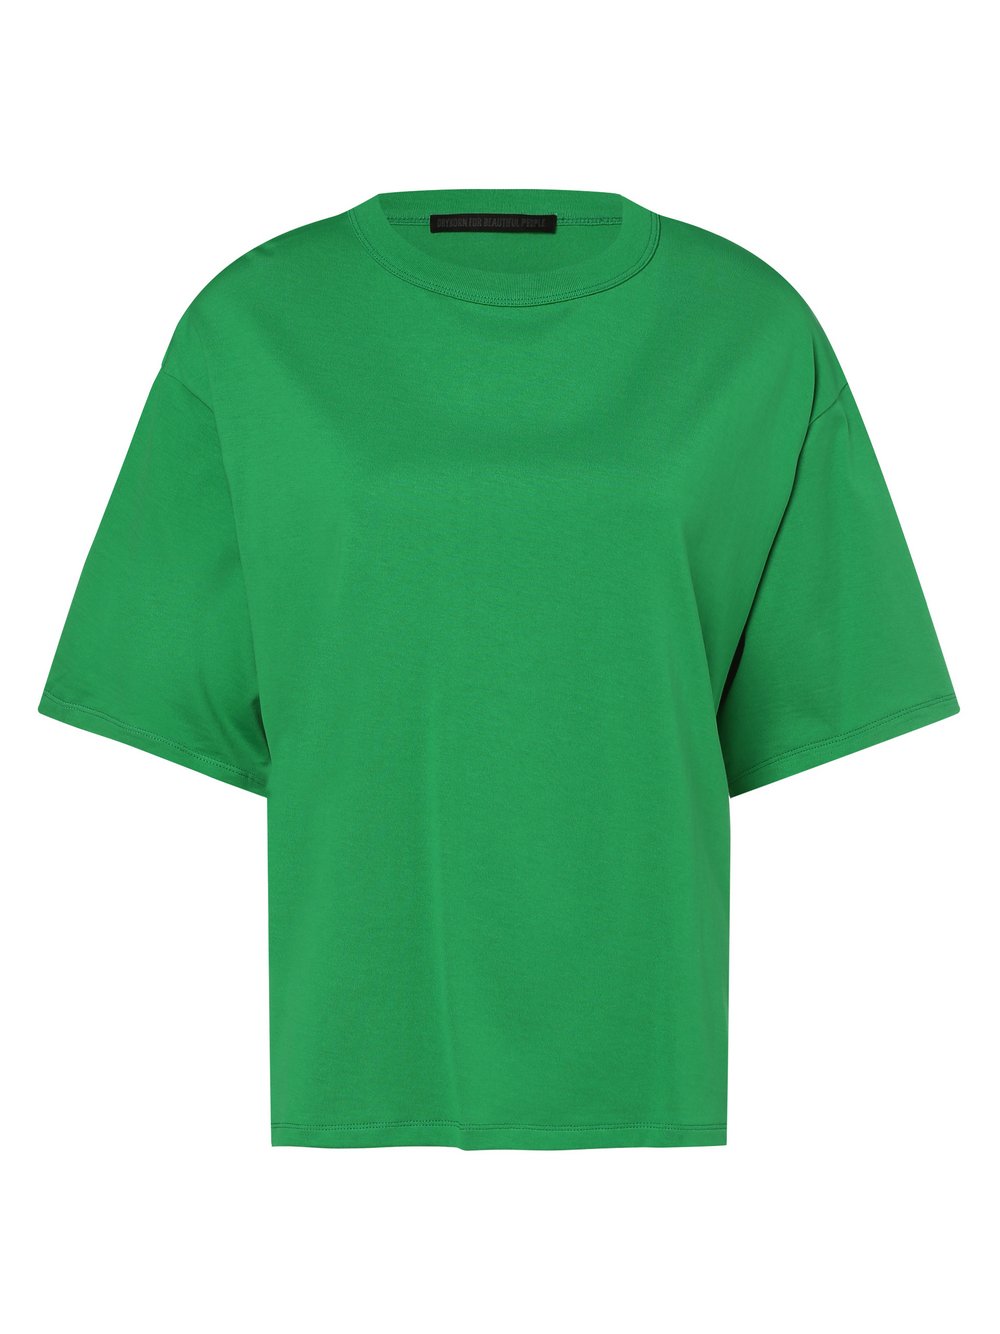 Drykorn - T-shirt damski – Areta, zielony